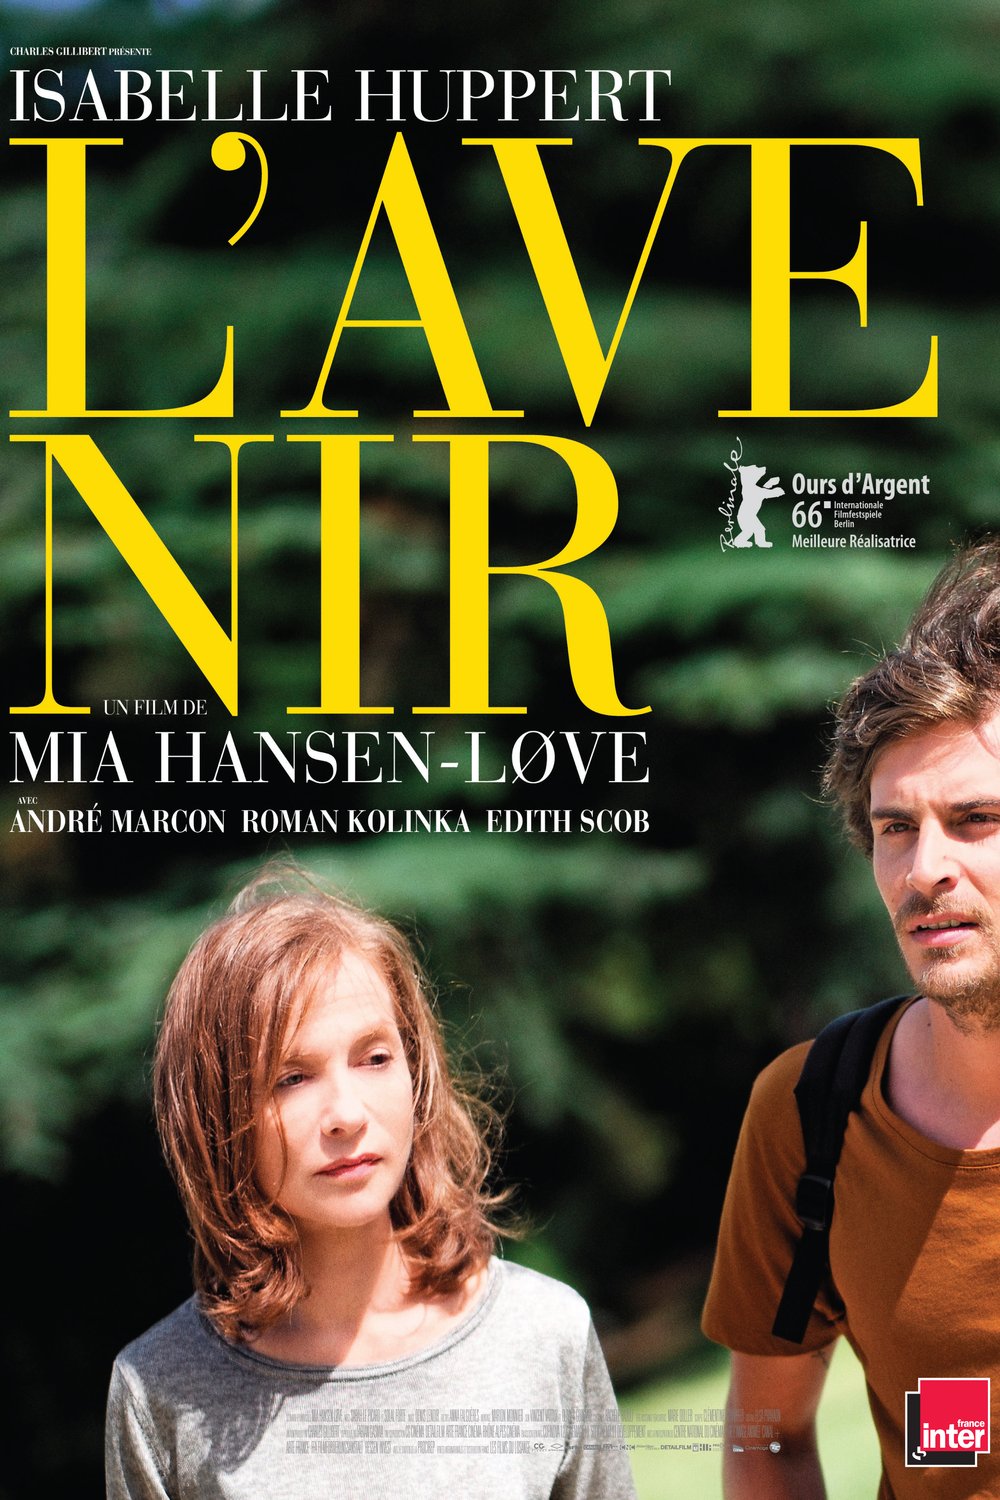 Poster of the movie L'Avenir